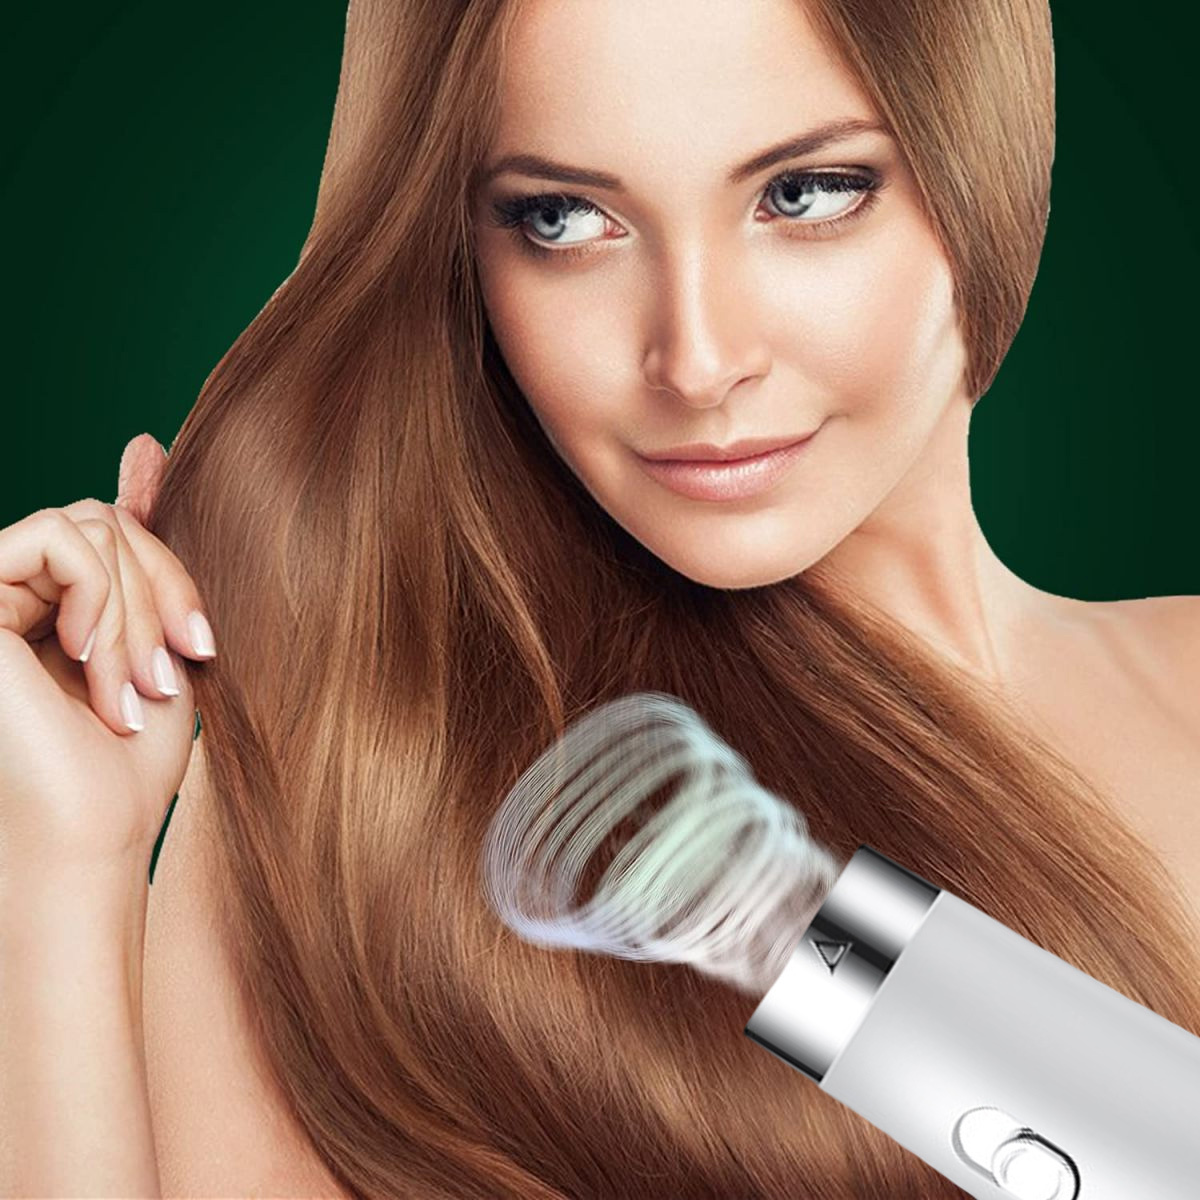 COZEVDNT Ionische Weiß Glätter, (750 Fön, Watt) Heißluft-Haarbürste: Haartrockner Schönes Lockenwickler, Geschenk